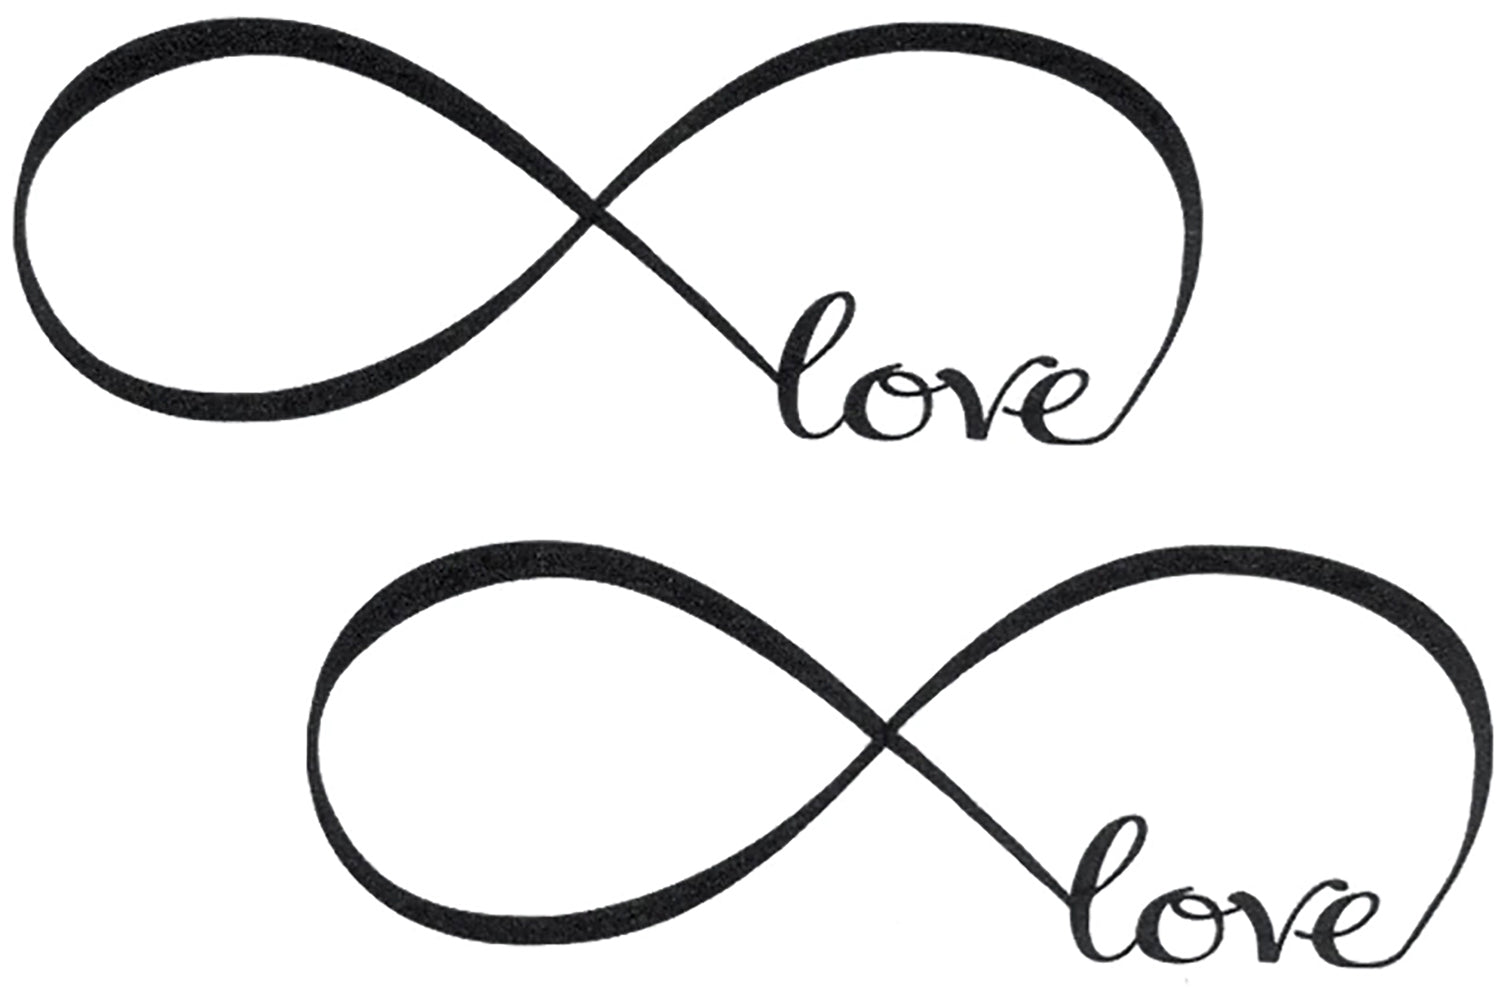 Infinite Love Infinity Symbol Black Waterproof Temporary Tattoos 2 Sheets